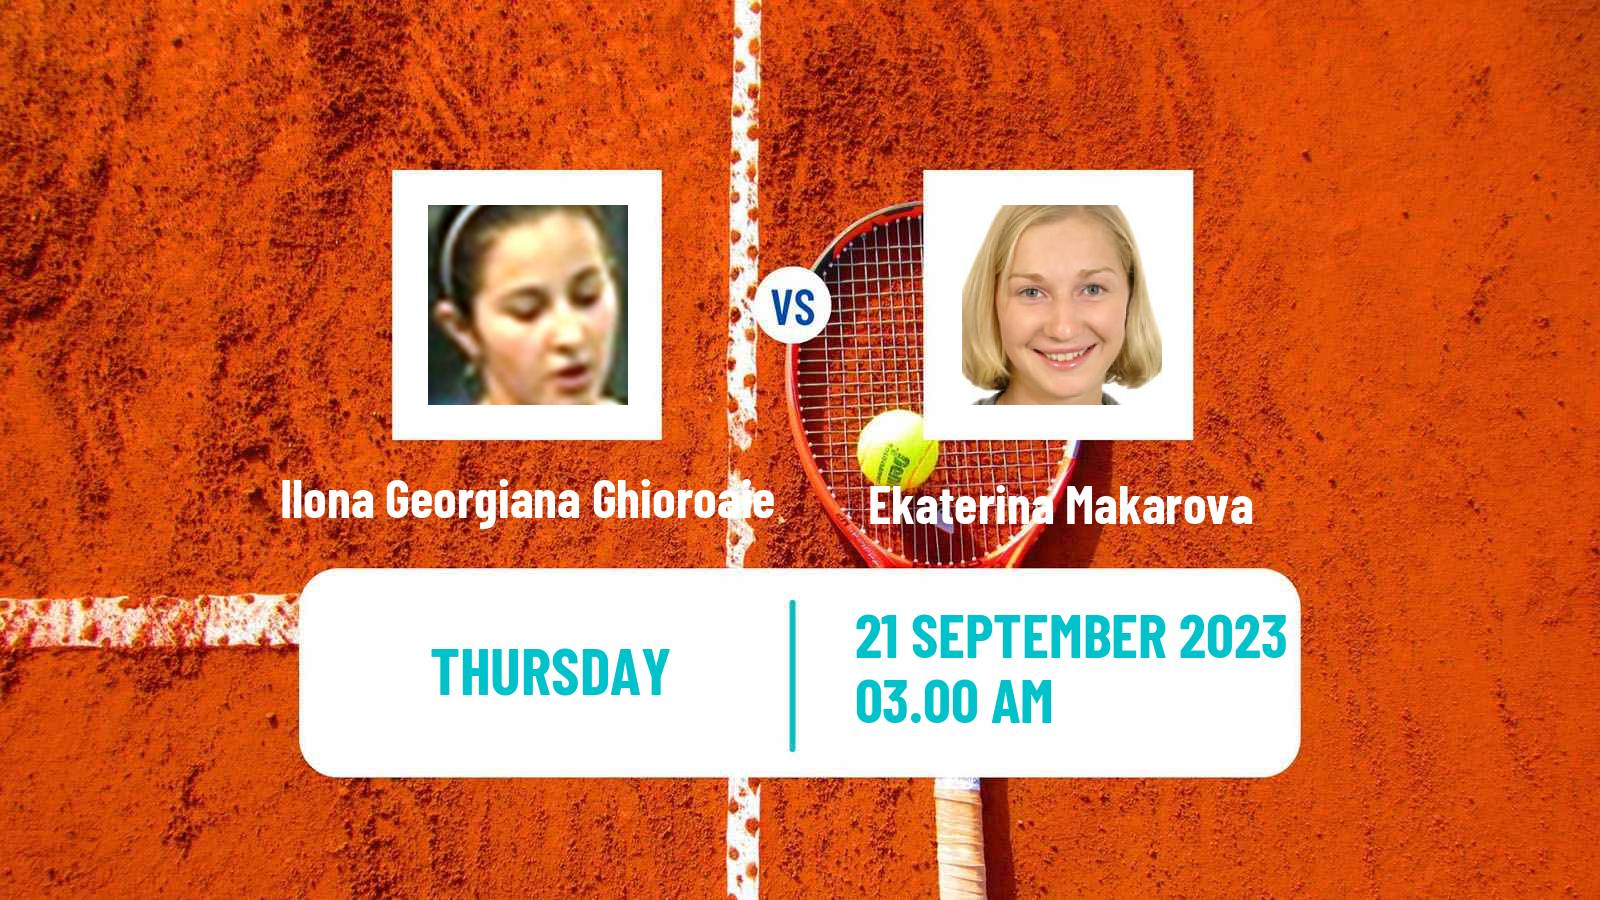 Tennis ITF W25 Slobozia Women Ilona Georgiana Ghioroaie - Ekaterina Makarova